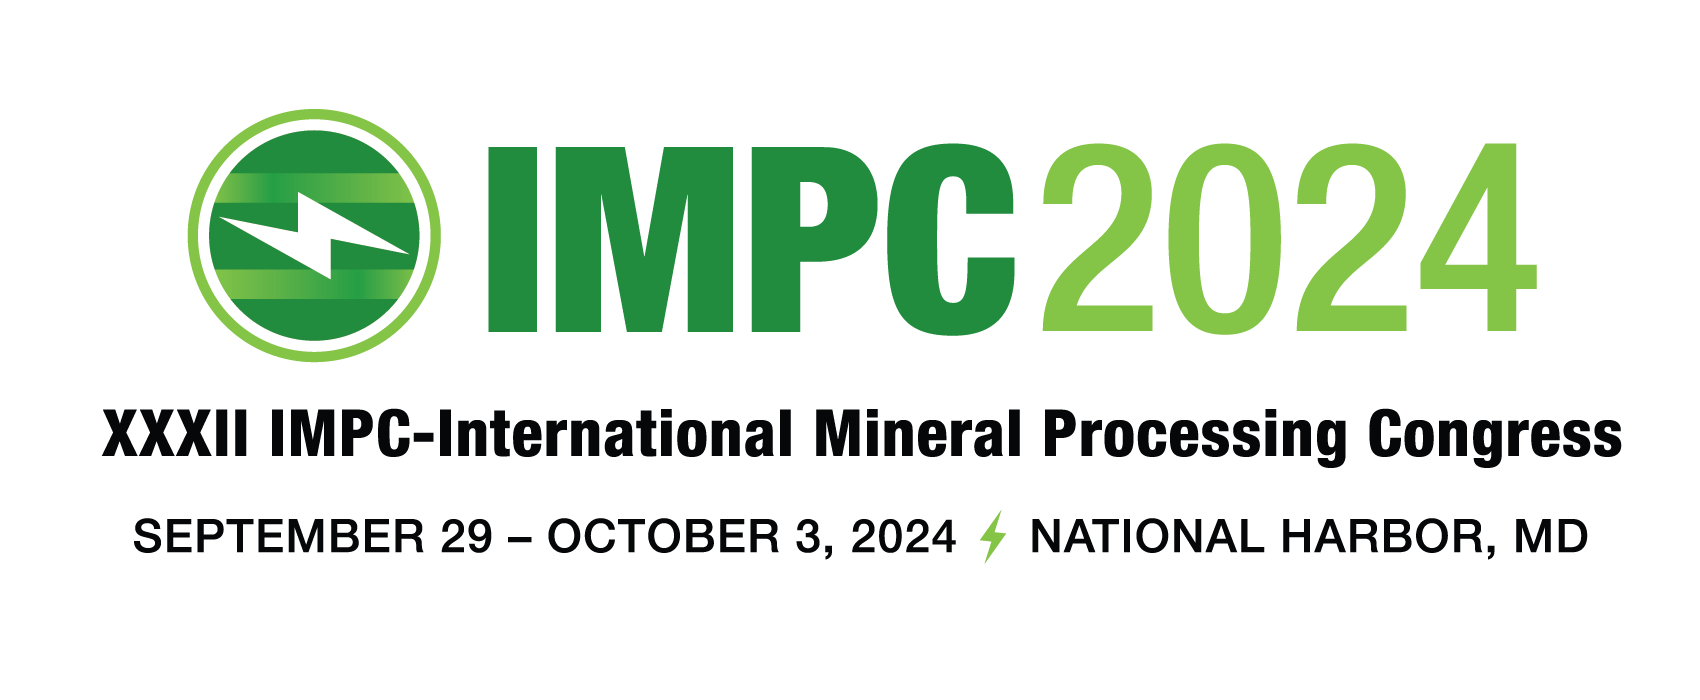 IMPC 2024: 32nd IMPC-International Mineral Processing Congress, September 29 - October 3rd, 2024